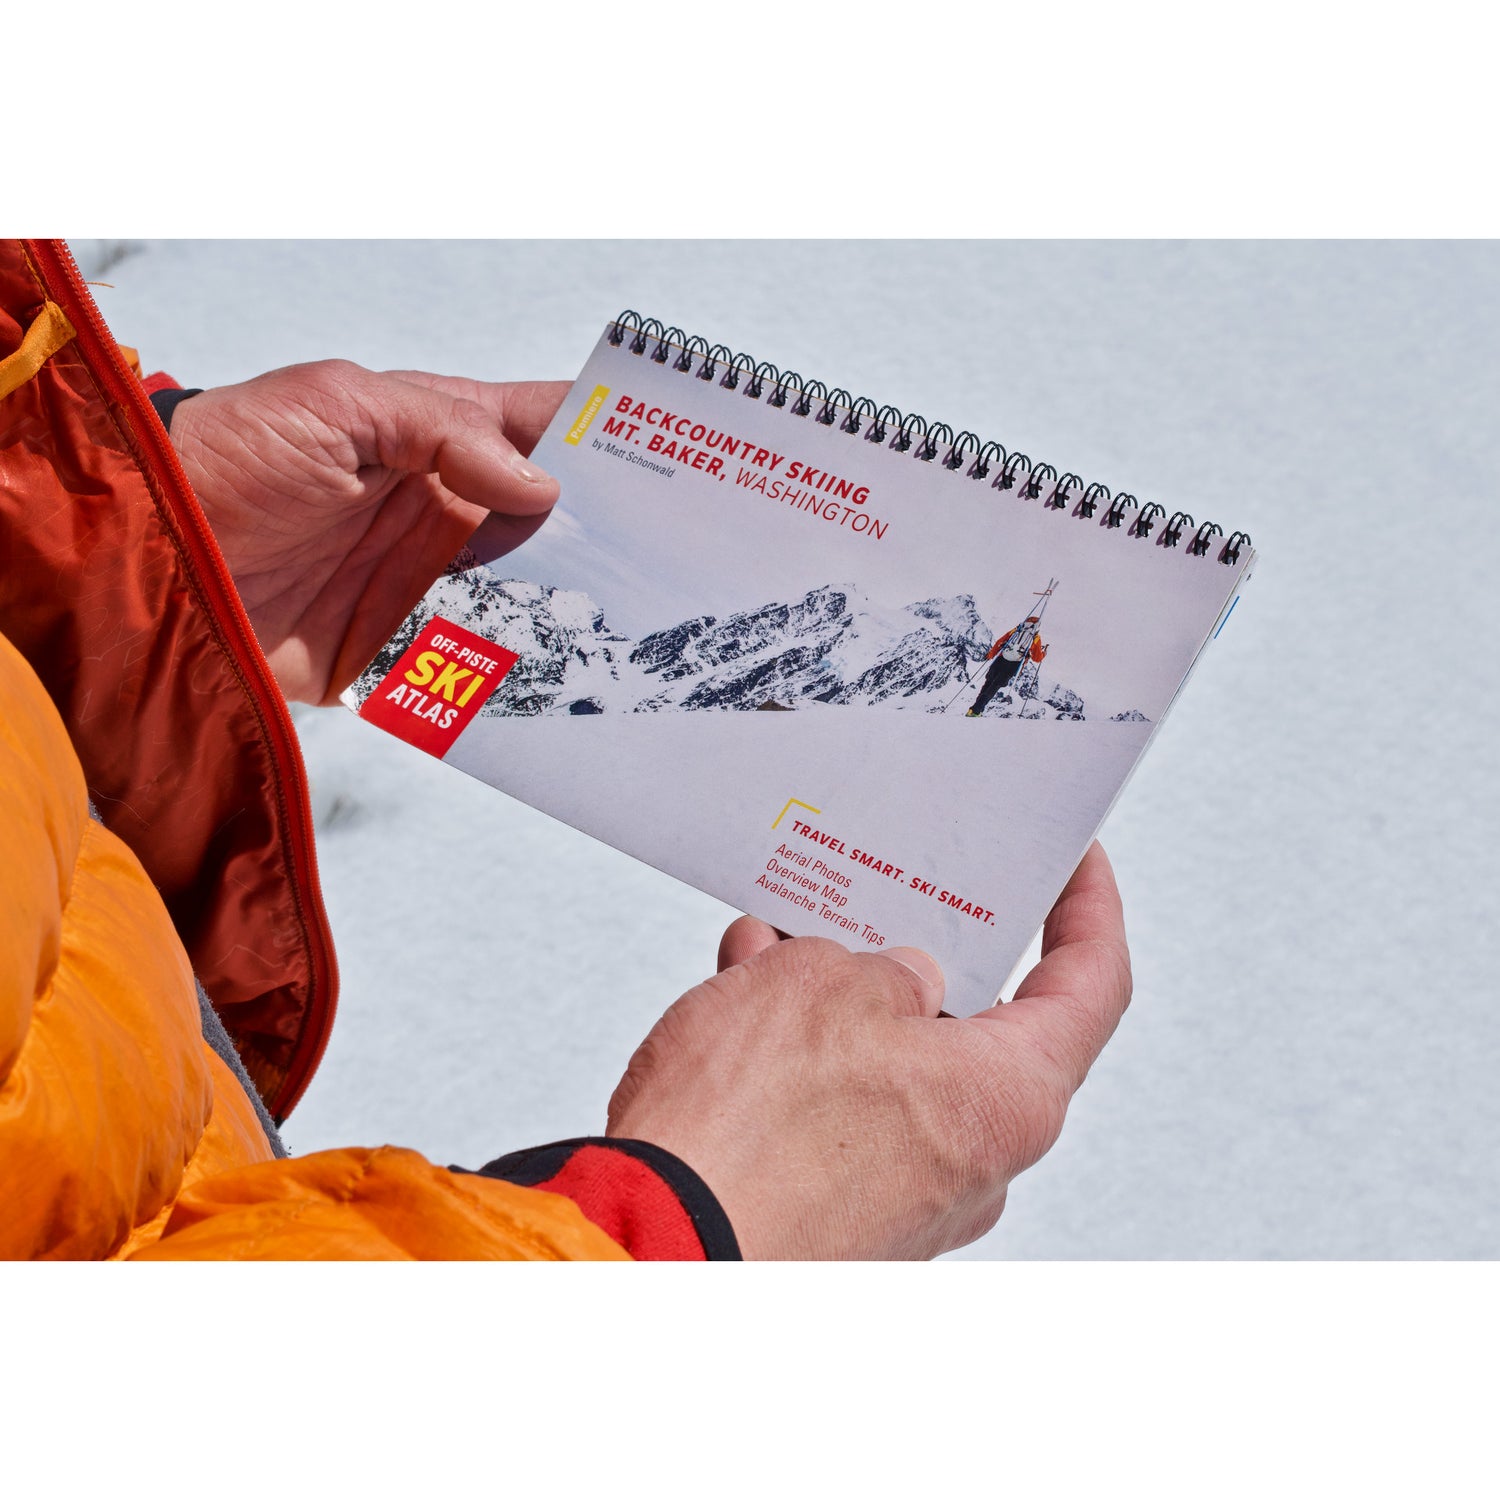 Beacon Guidebooks Backcountry Skiing Mt. Baker | Backcountry Books